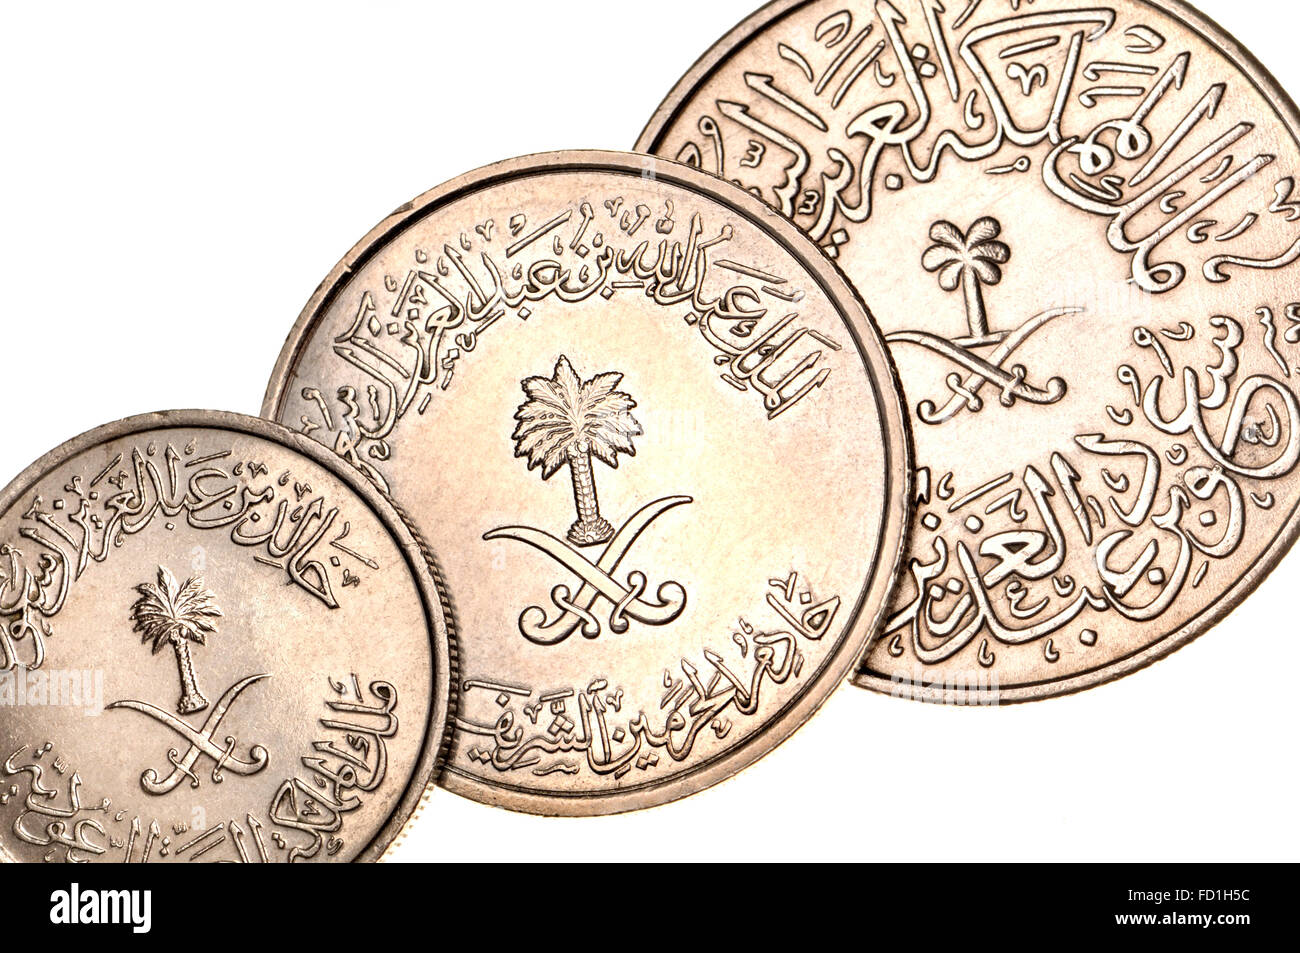 Monete di Arabia Saudita mostra orientale scrittura araba e numeri, Palm tree e spade incrociate Foto Stock